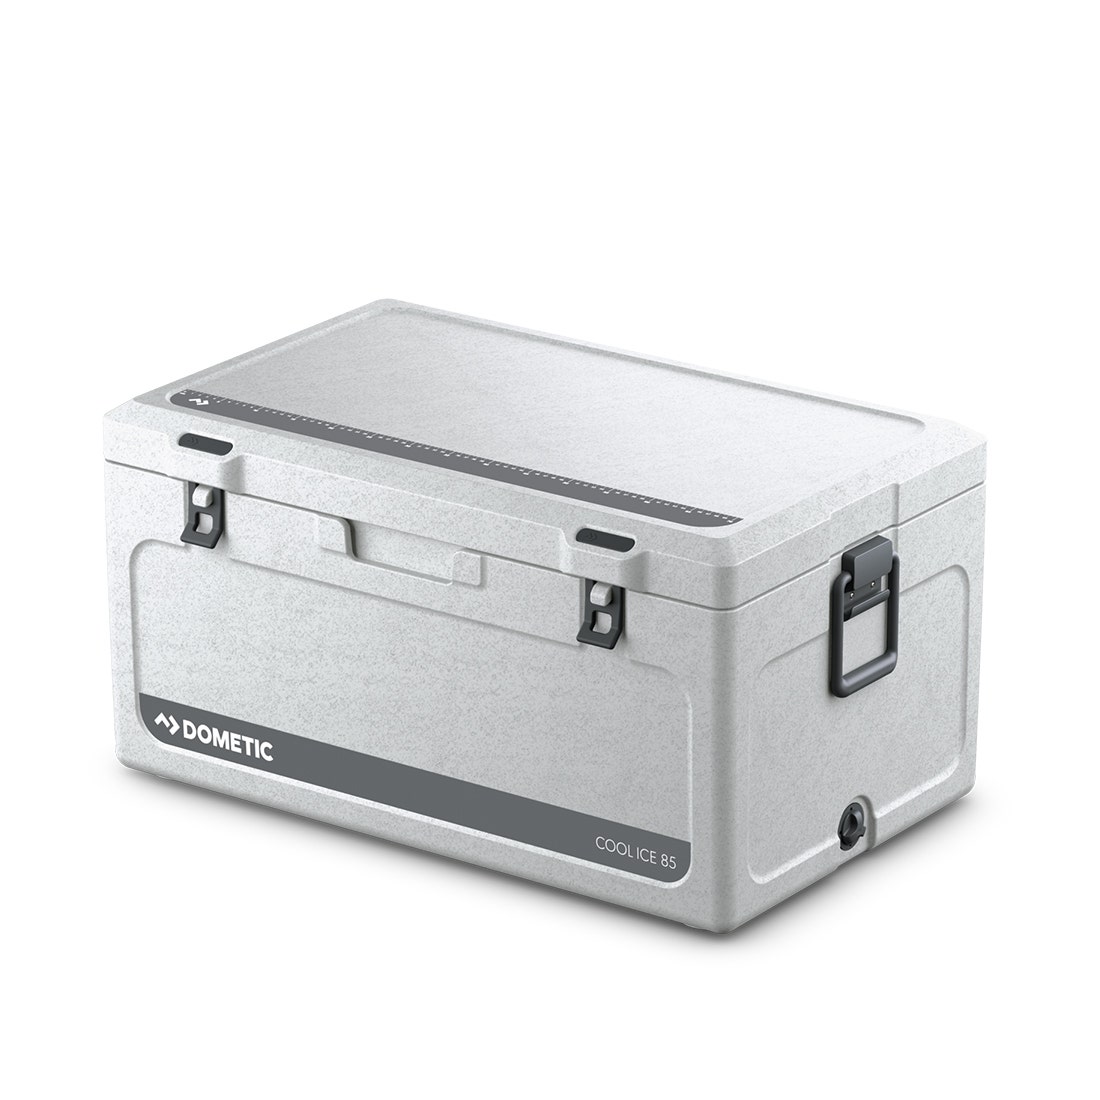 DOMETIC ถังเก็บความเย็น Cool Ice Box รุ่น CI85 ความจุ 87 ลิตร-01